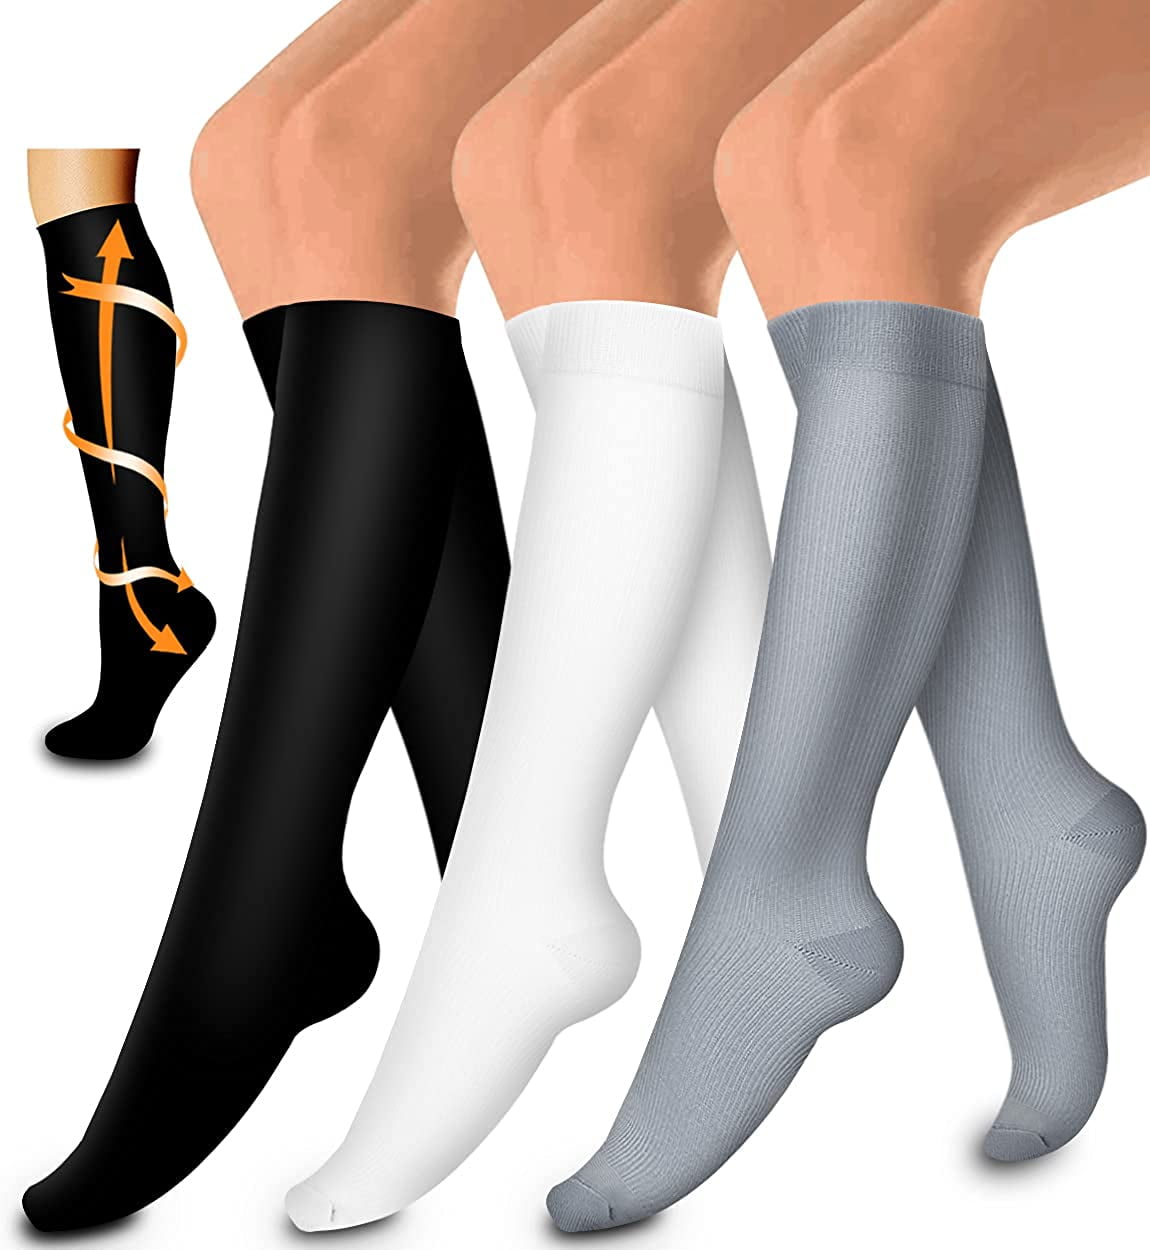 New Compression Socks For Men & Women Circulation 20-30mmhg Best